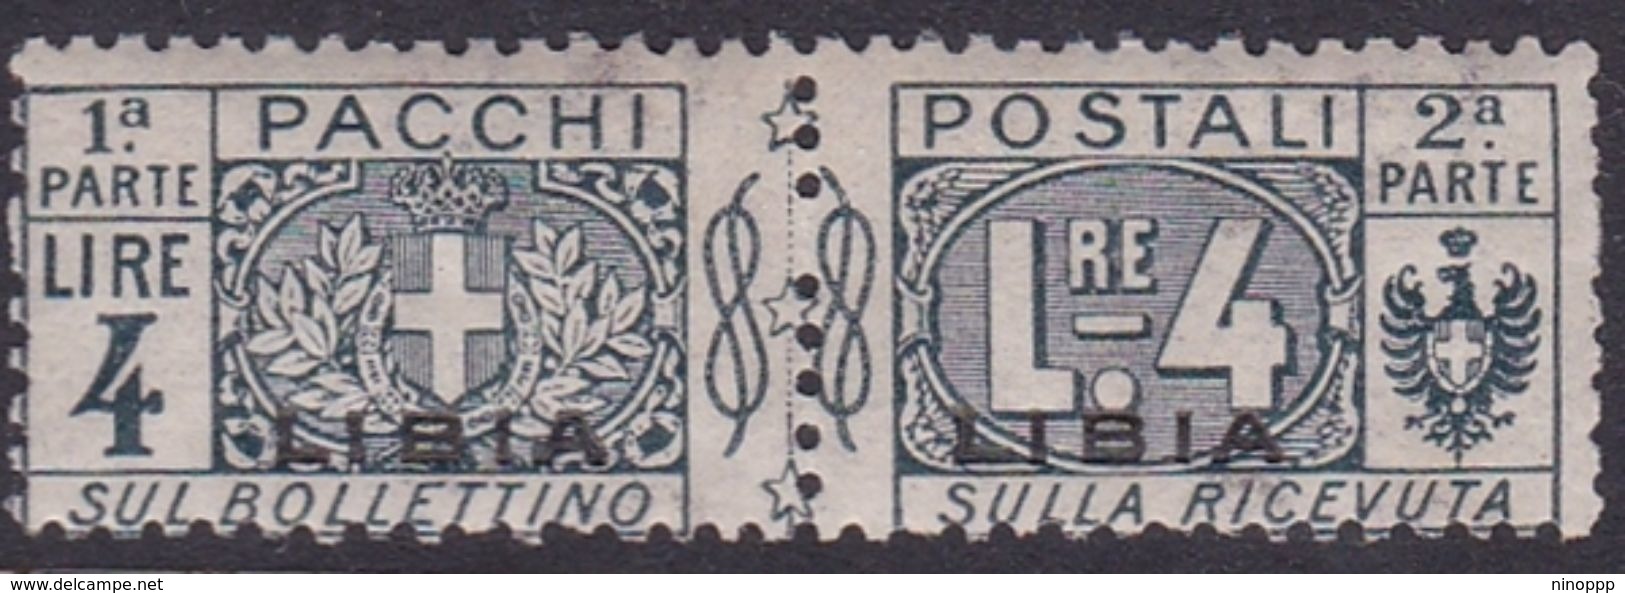 Italy-Colonies And Territories-Libya PP9 1915-24 Parcel Post,4 Lire Slate,mint Hinged - Libya